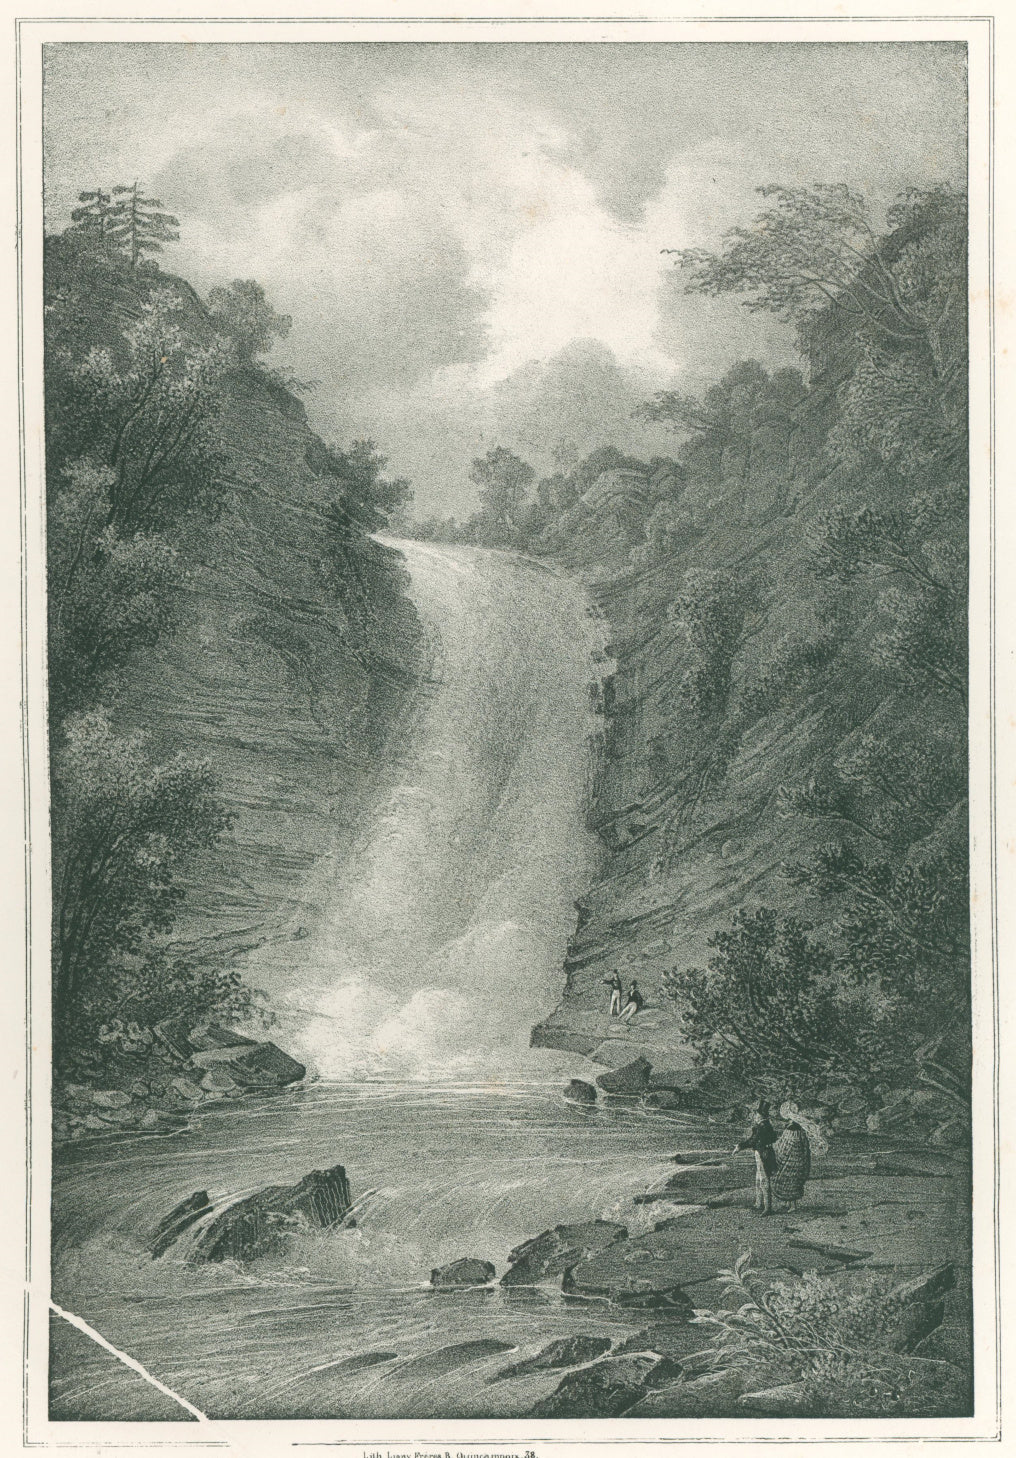 Milbert, Jacques Gerard “Deer Creek Falls.”  [Jefferson County, NY]